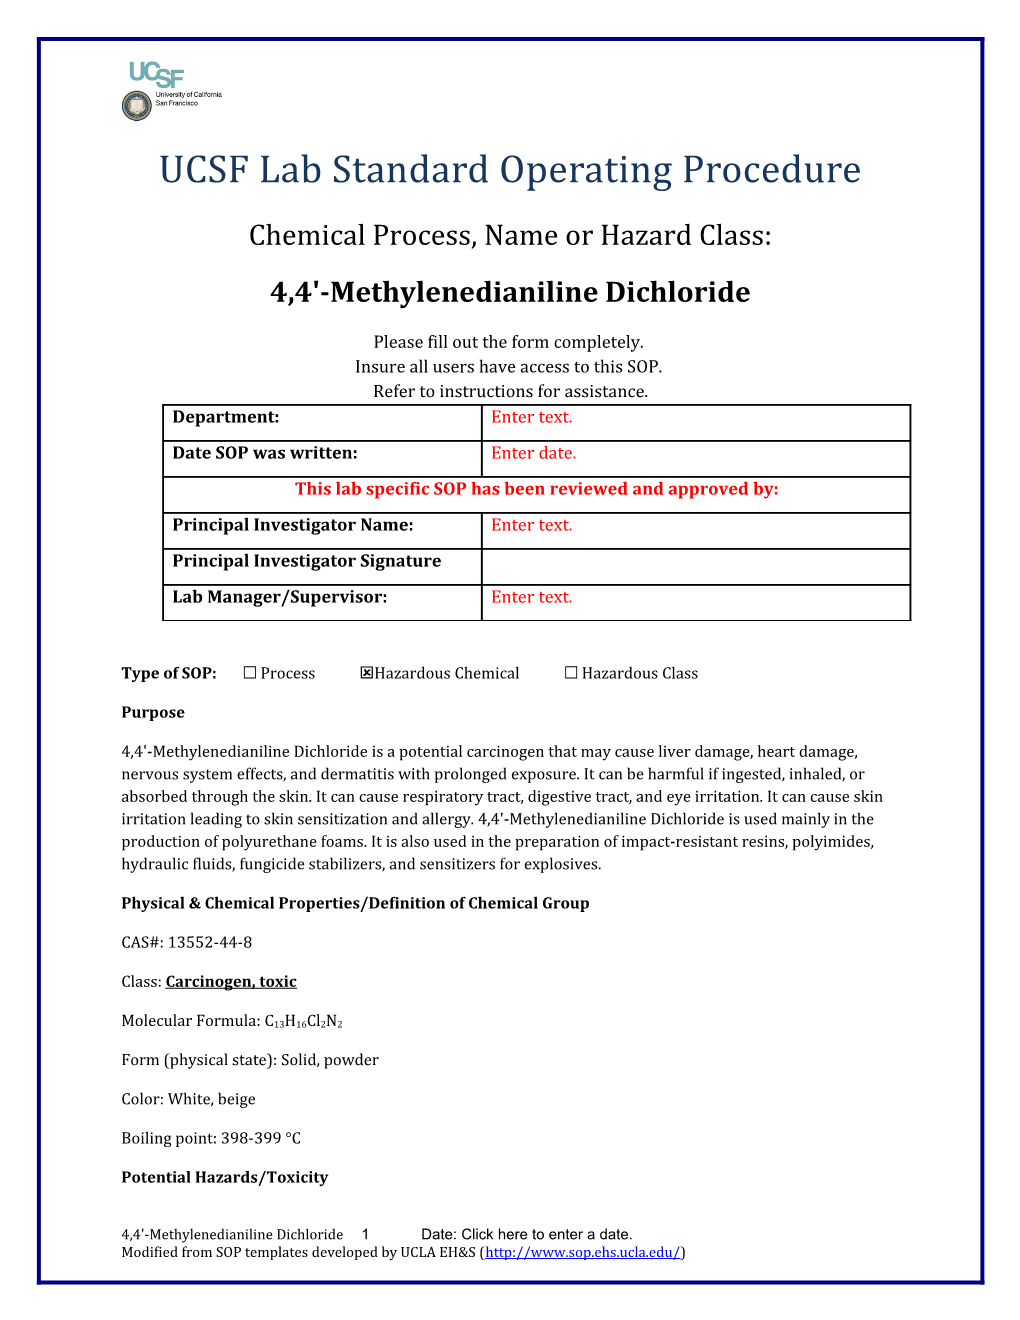 UCSF Lab Standard Operating Procedure s40